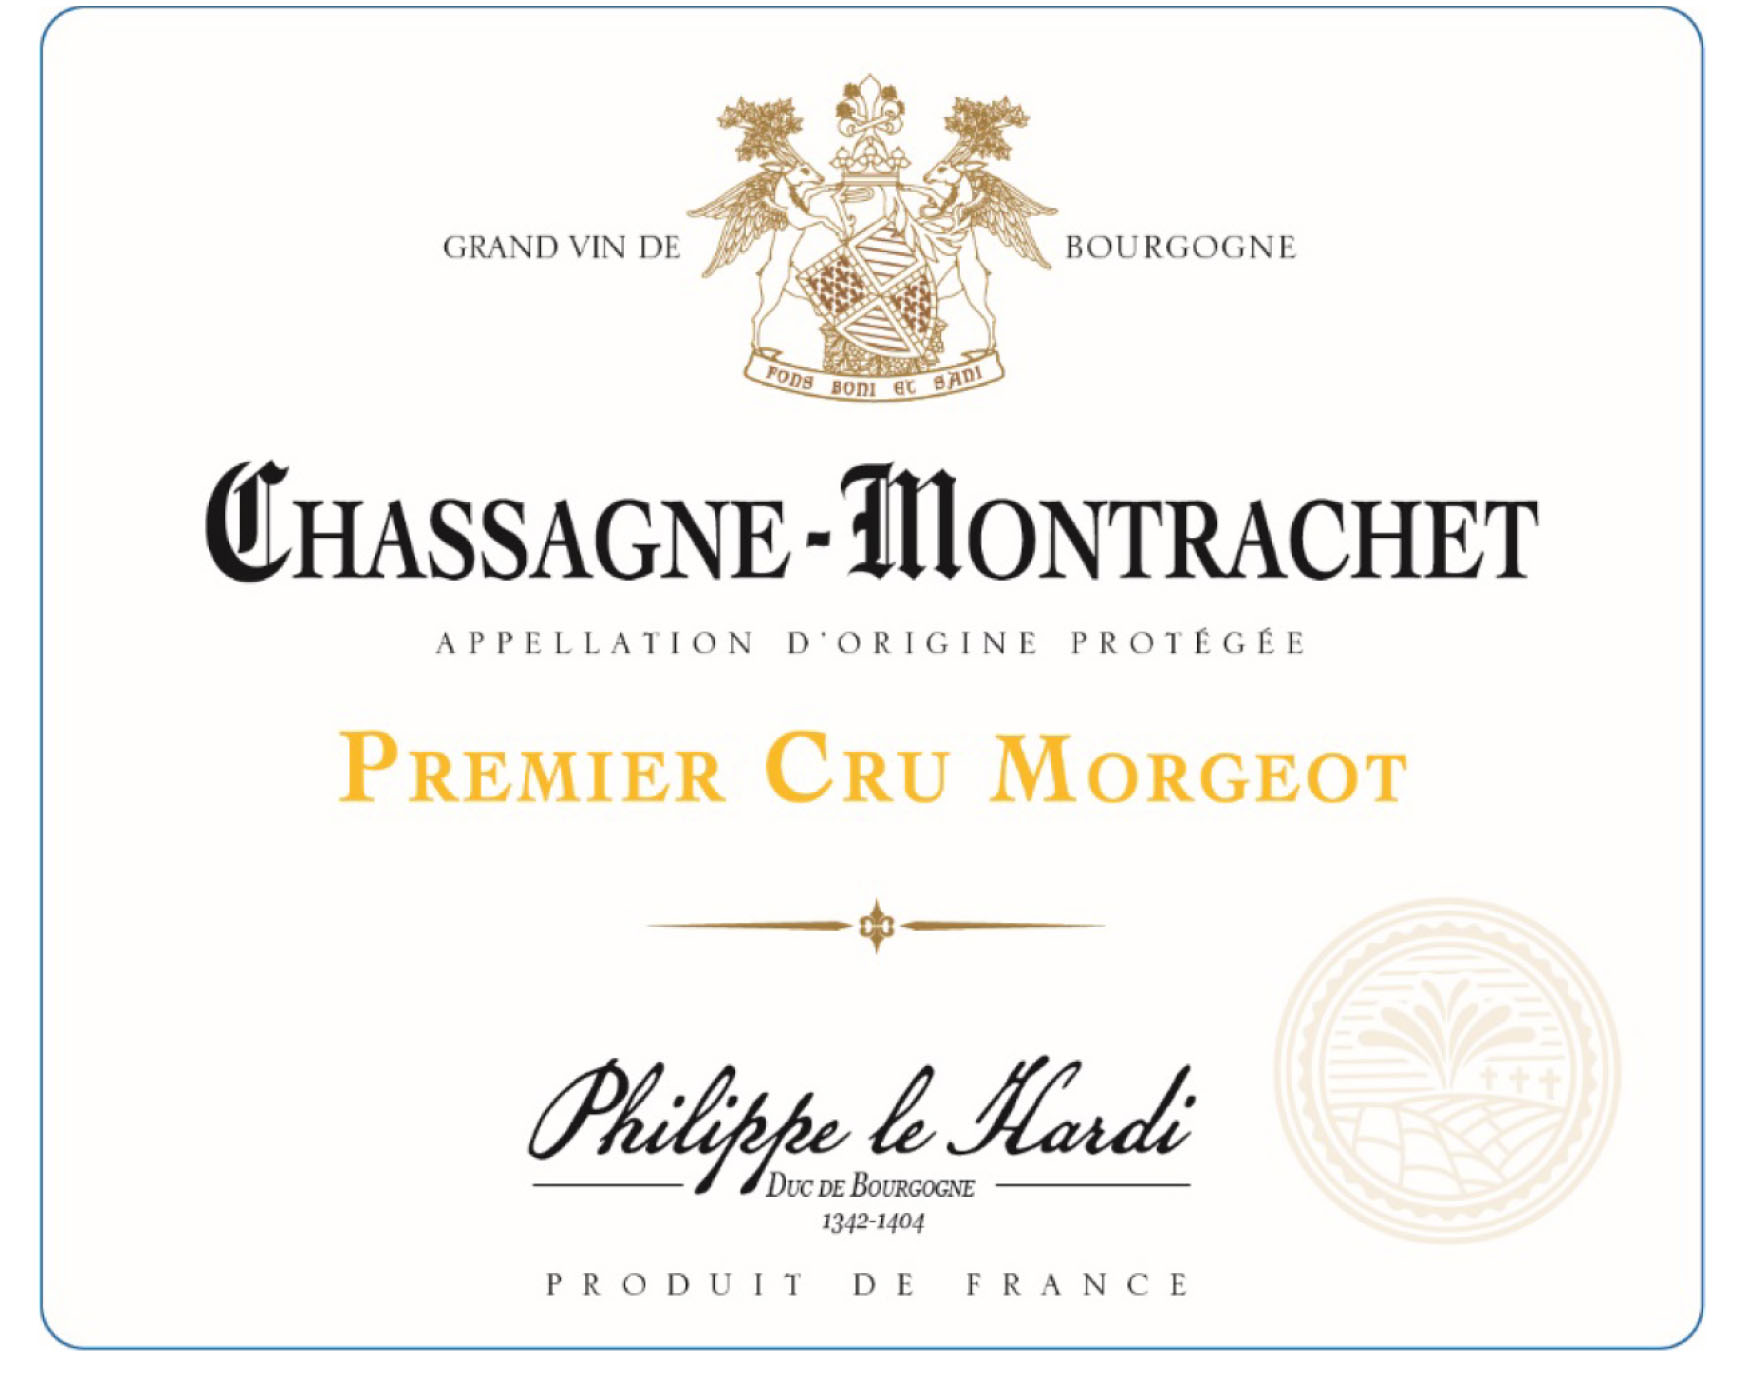 Philippe le Hardi - Chassagne-Montrachet 1er Cru Morgeot label